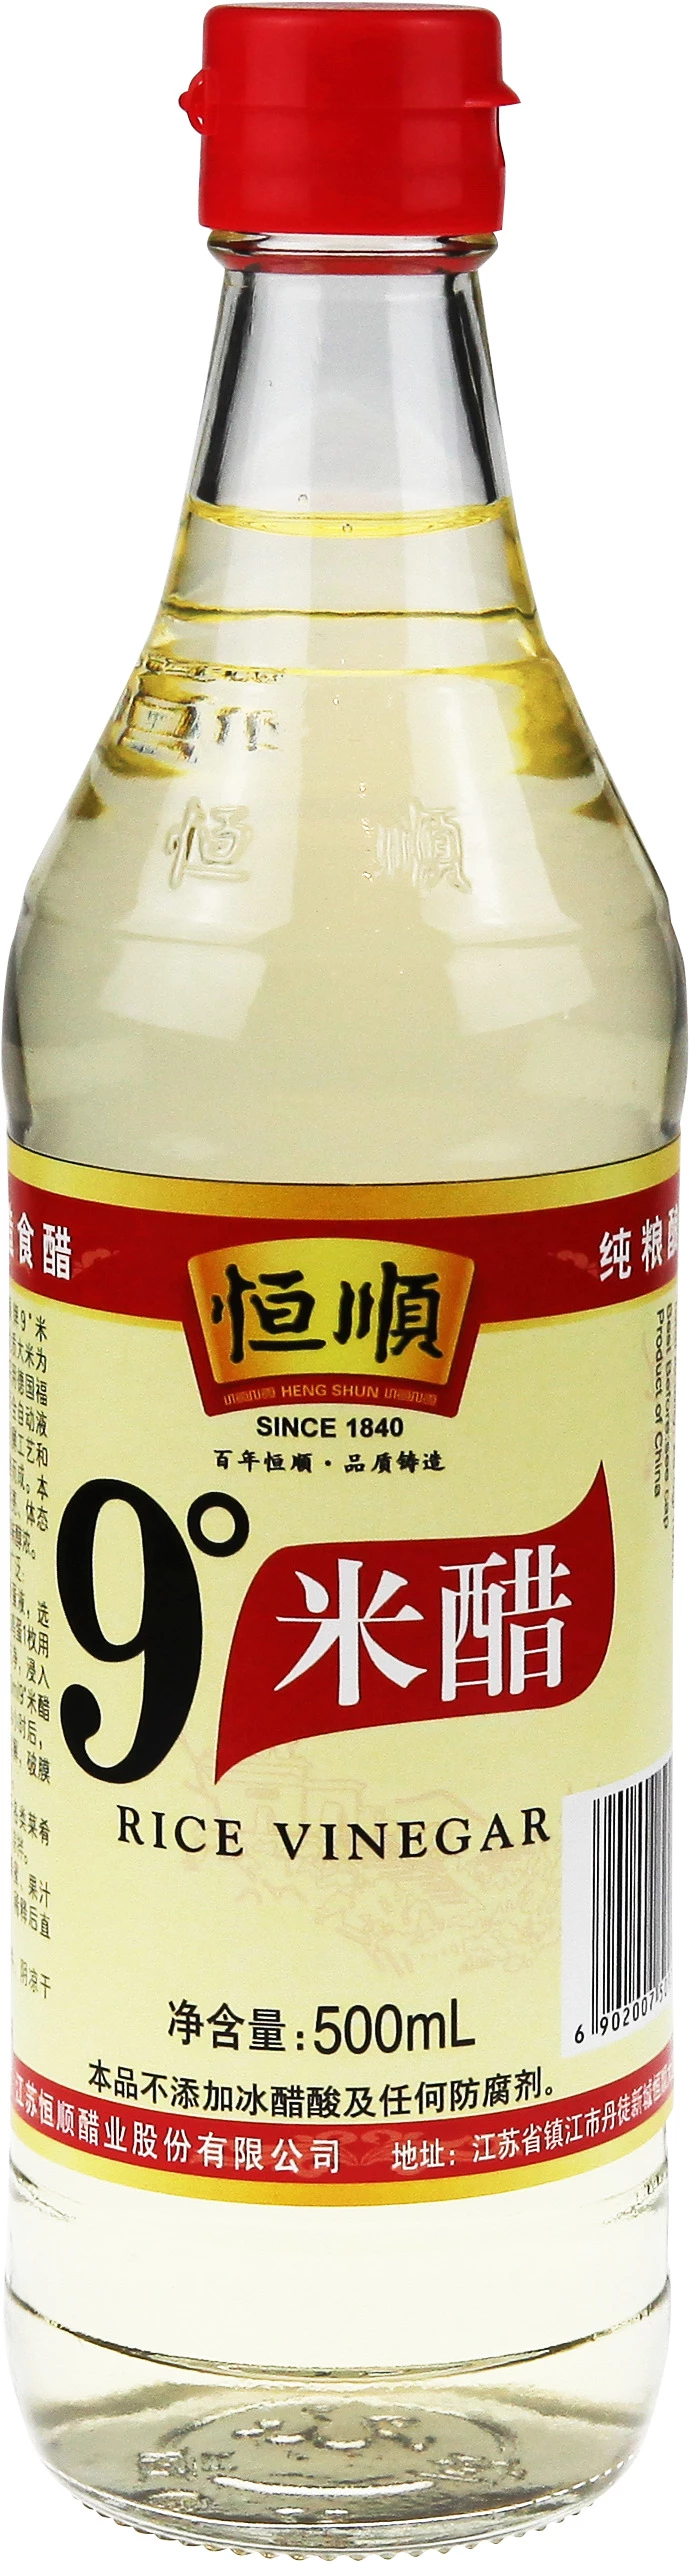 Белый рисовый уксус 12 х 500 мл - Heng Shun